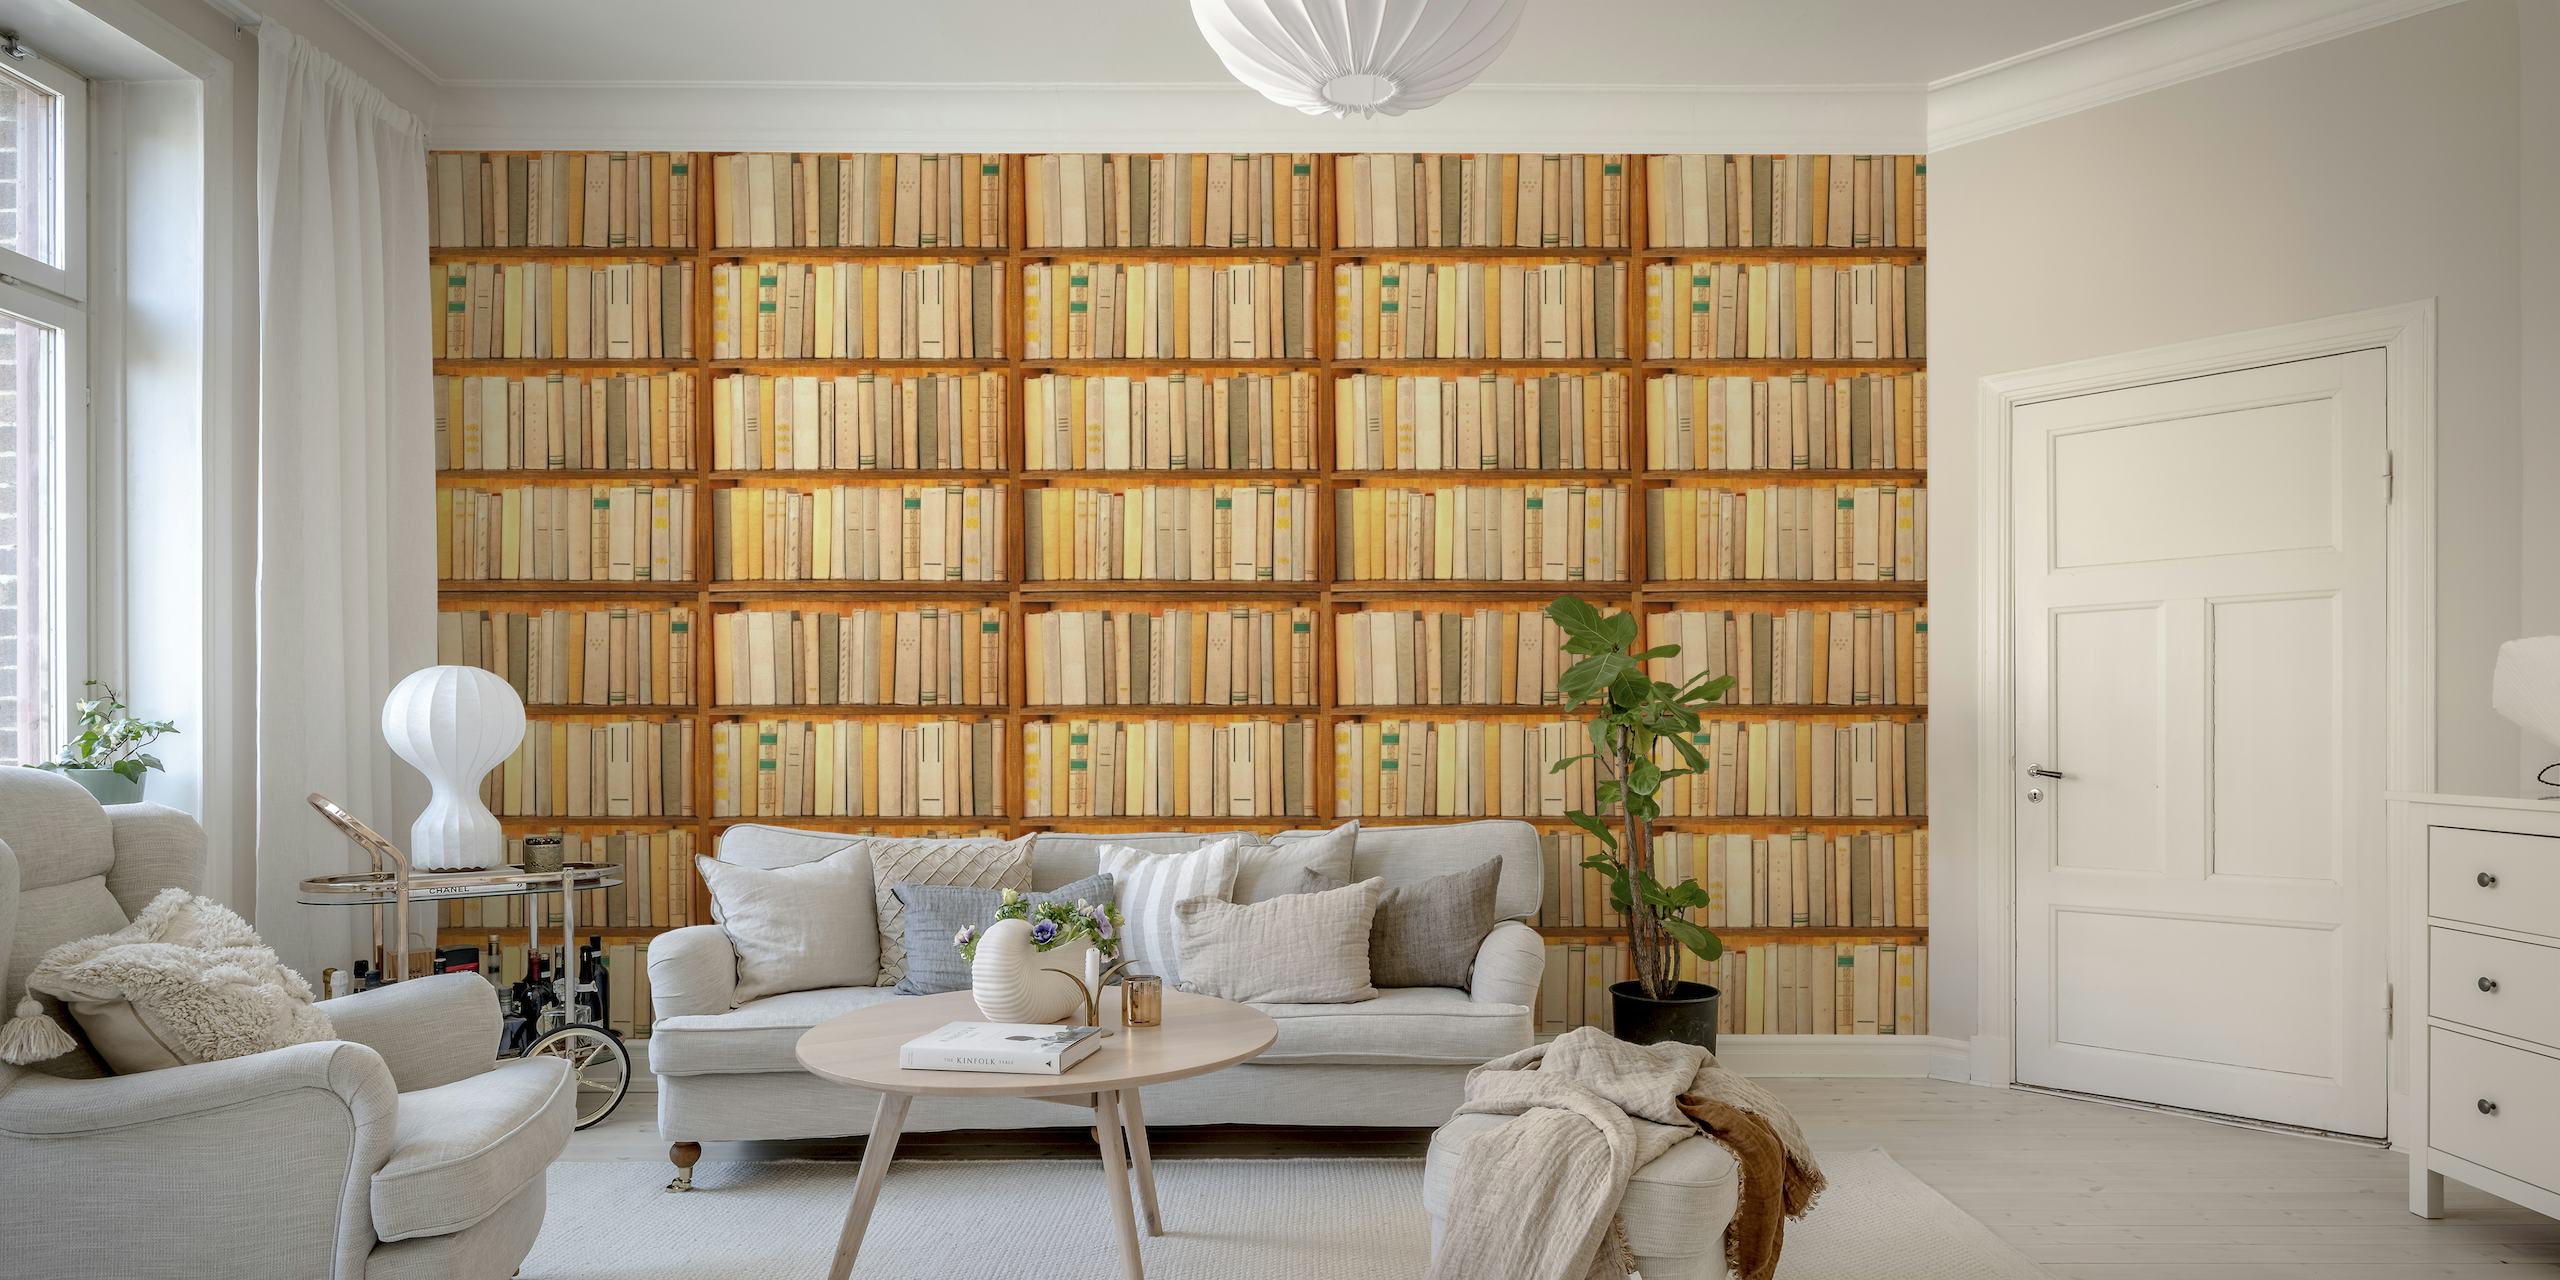 Bookshelf behang